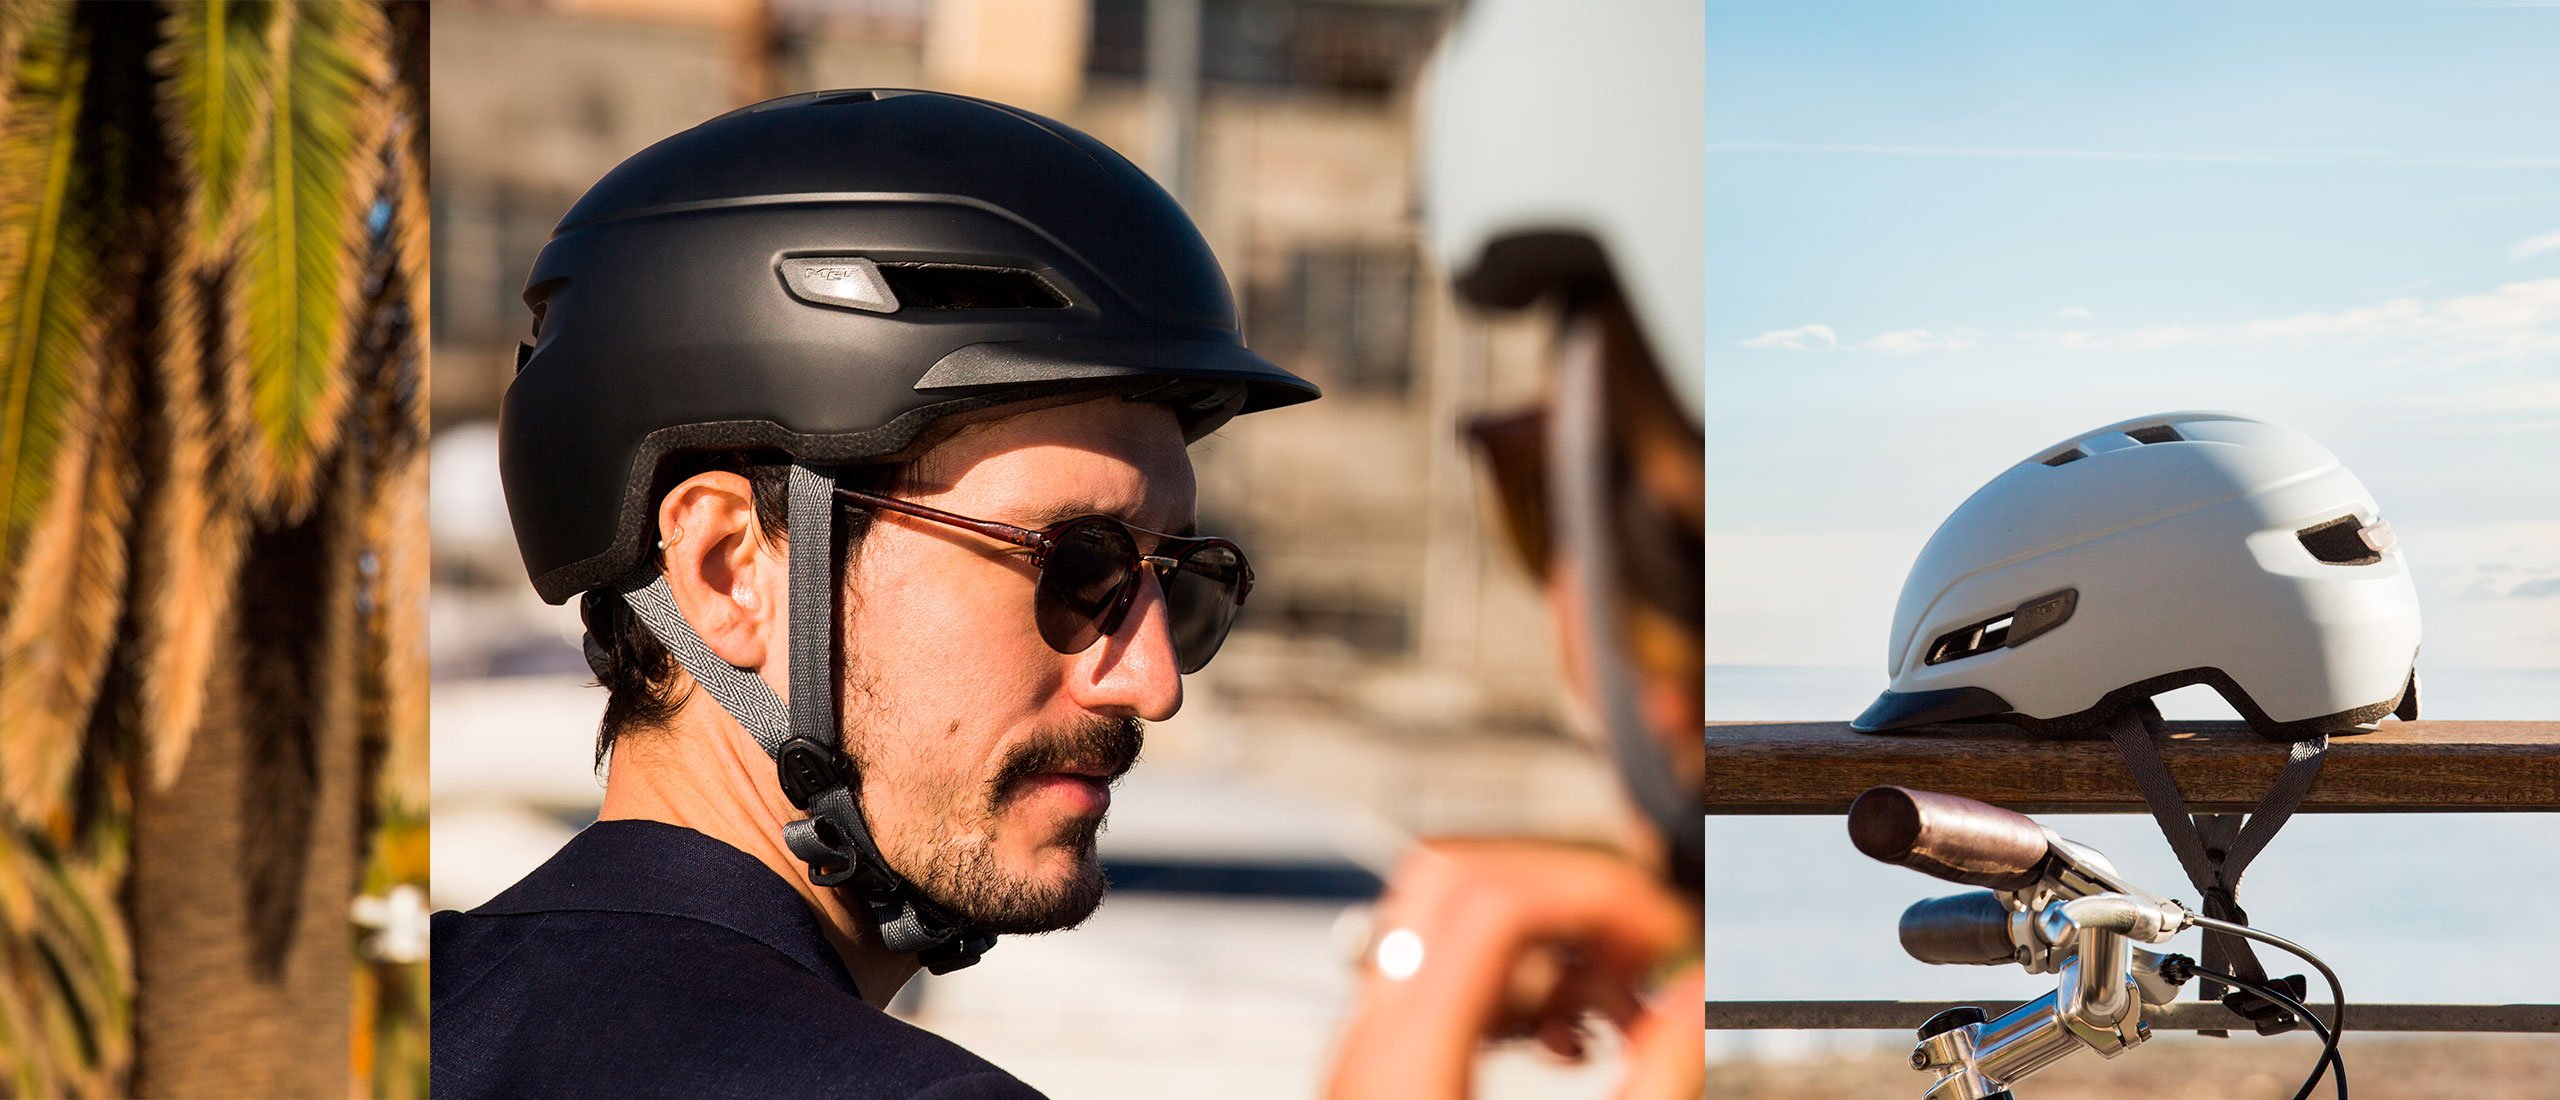 MET Corso Urban, E-bike and Commuting Helmet